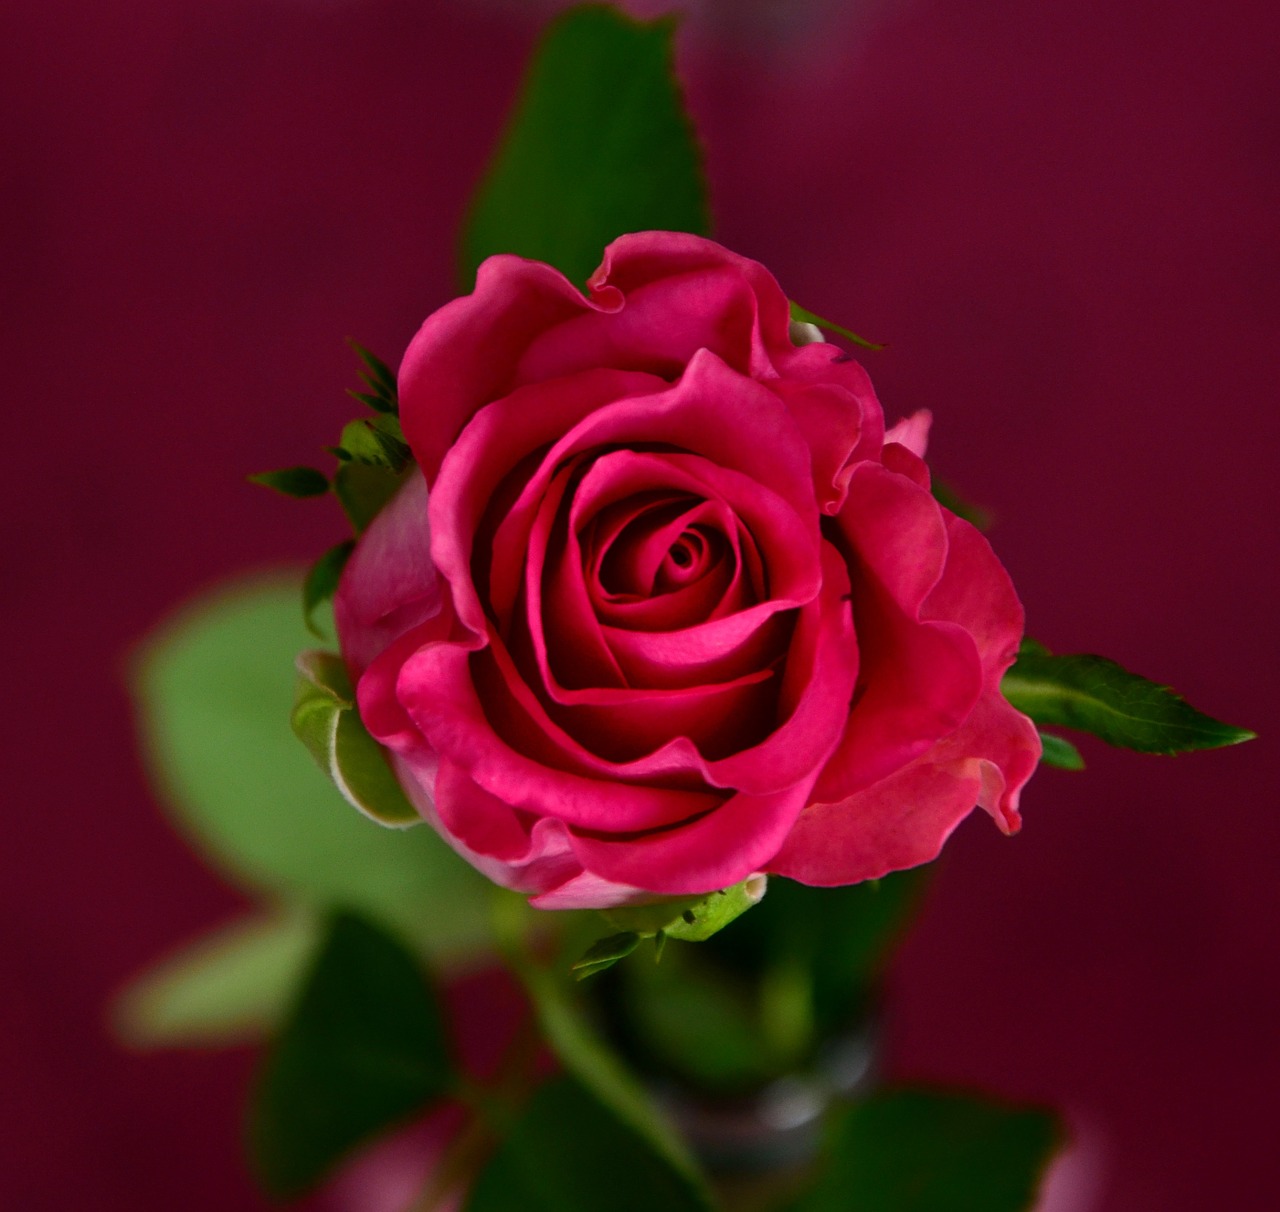 Image - rose pink blossom bloom flowers